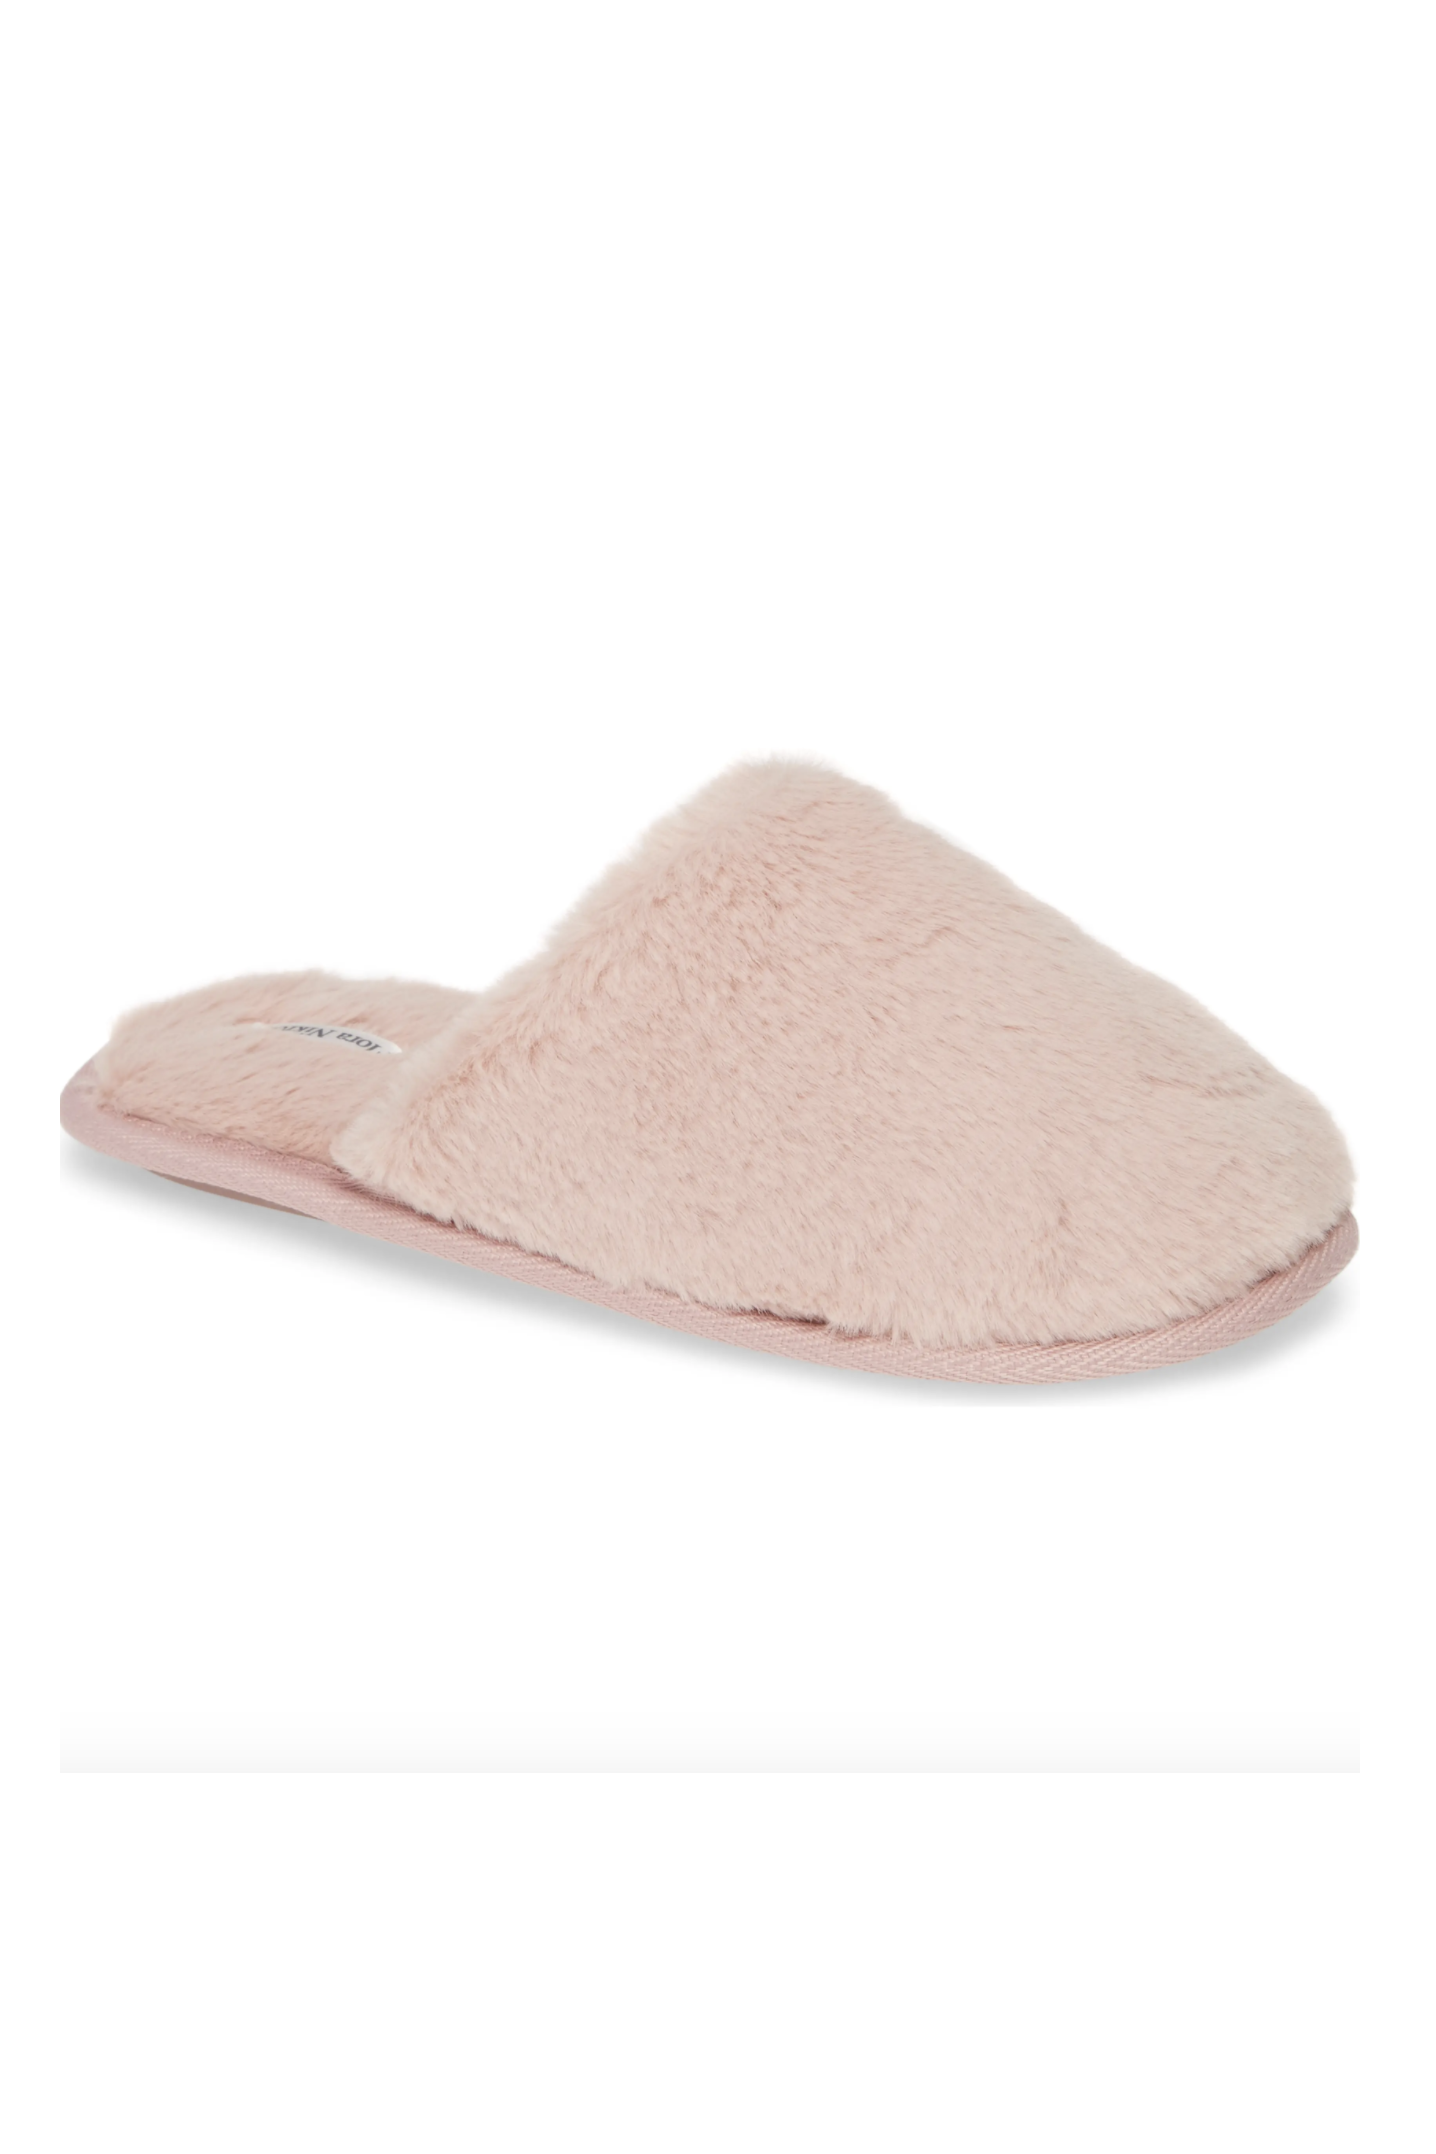 best home slippers for summer